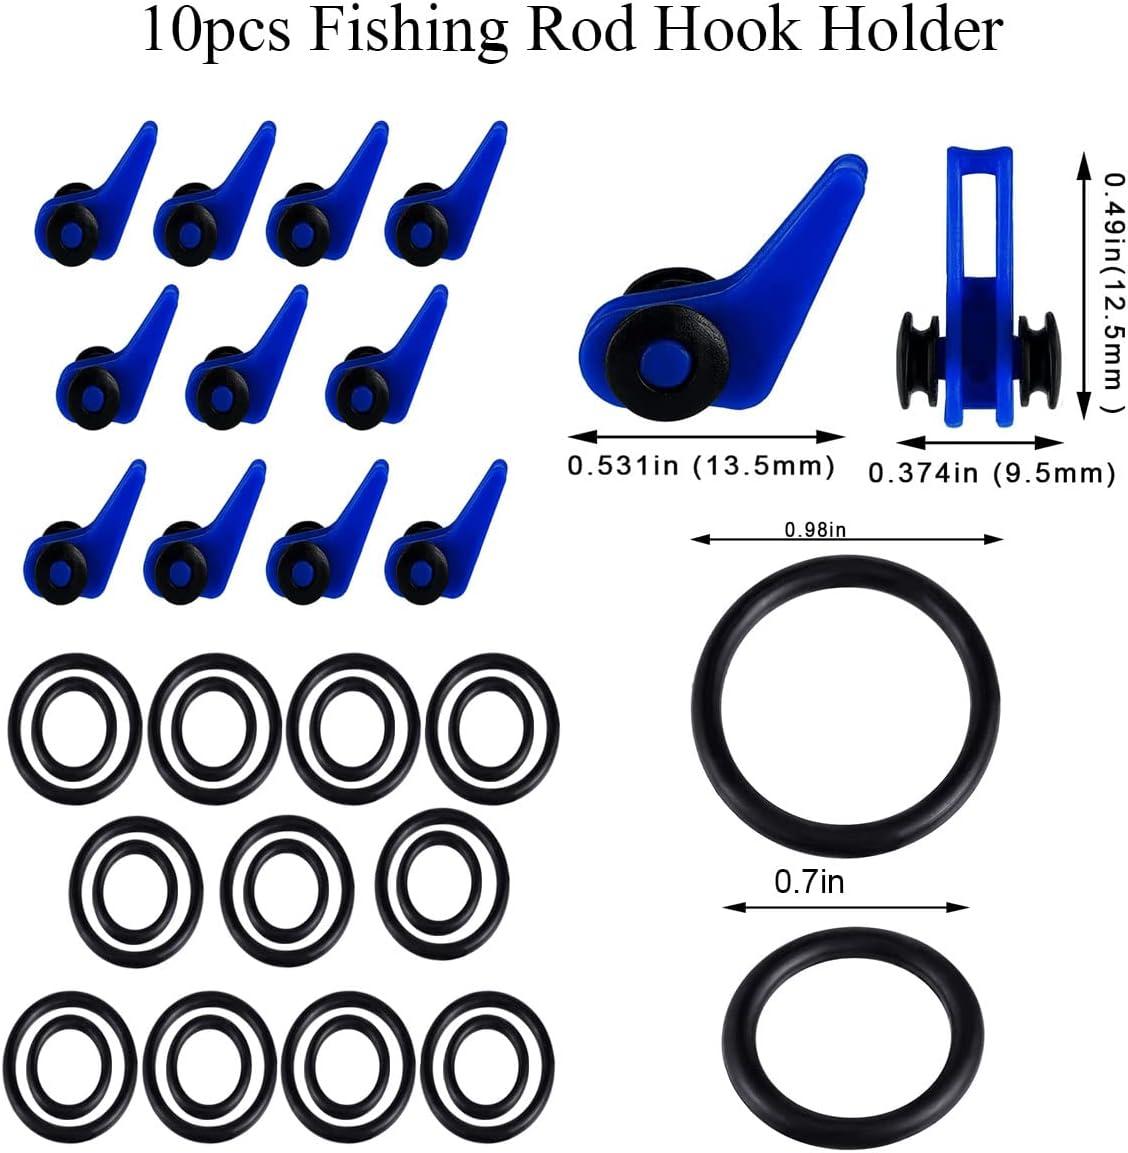 Deapeick 5pcs Fishing Biat Wraps with 10pcs Fishing Rod Hook Holder Durable  Clear PVC Lure Covers Keeps Fishing Safe Easily See Lure Covers Fishing Hook  Bait Storage 3 L+ 2M 3L+2M+10pcs hook